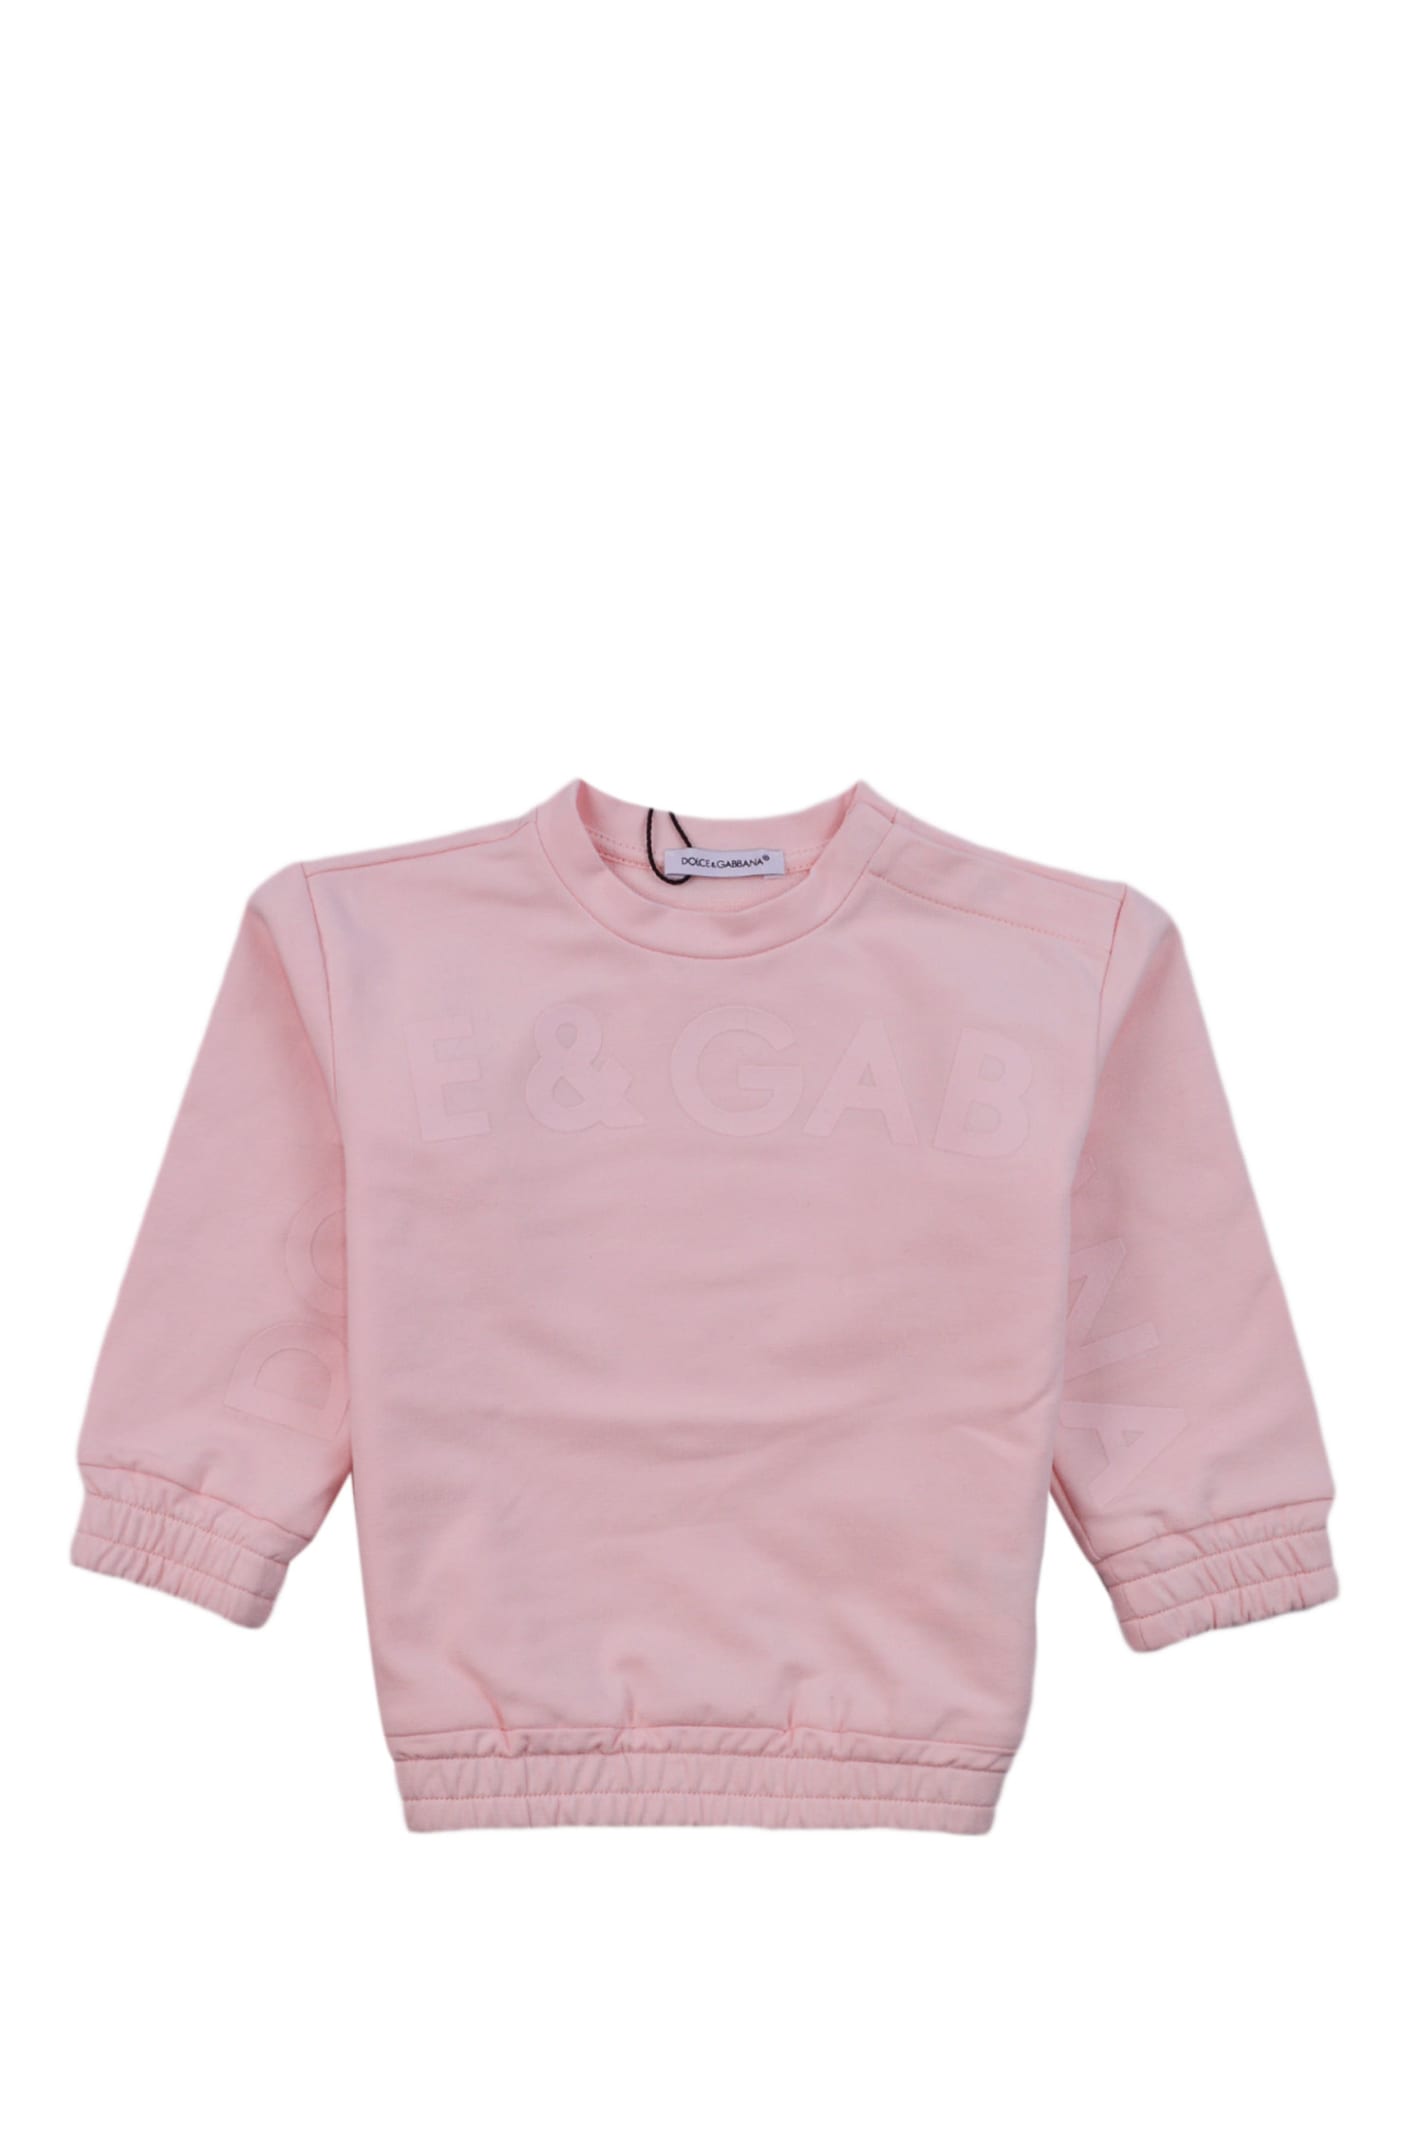 Dolce & Gabbana Babies' Cotton Sweatshirt In Rose